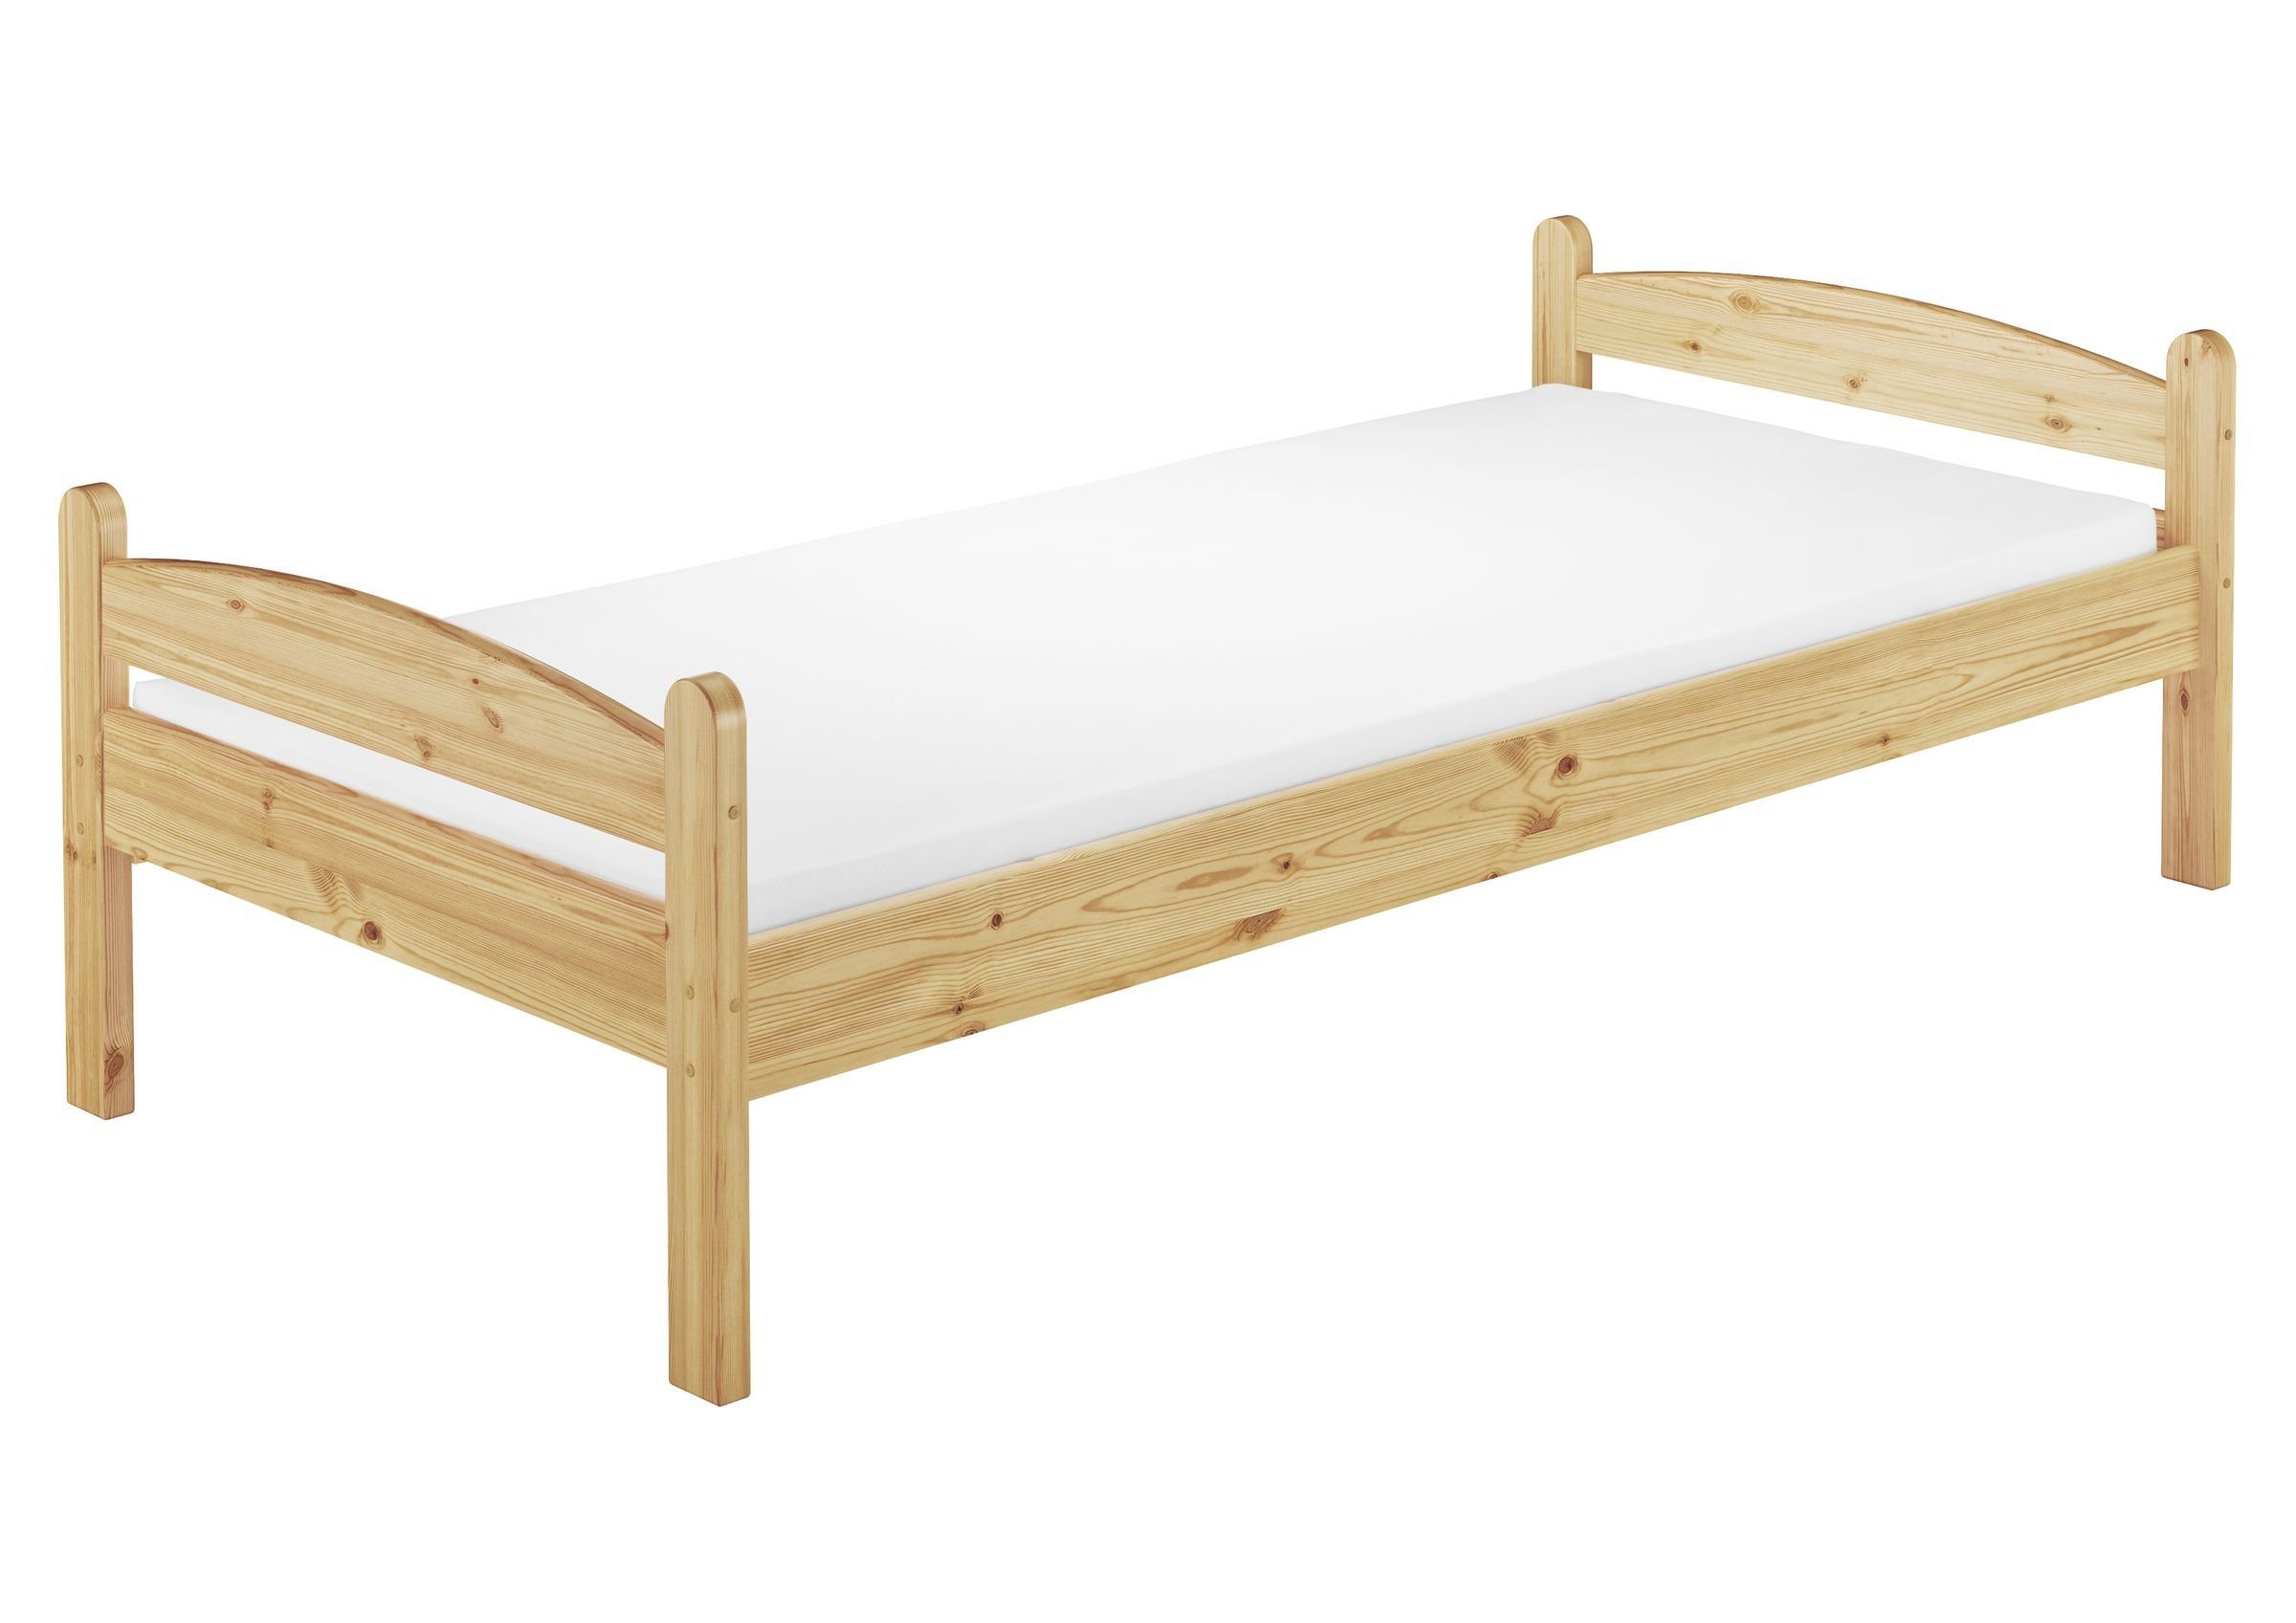 ERST-HOLZ Bett Holzgestell, 100x200, Kieferfarblos lackiert mit und Rost Matratze Bettenset